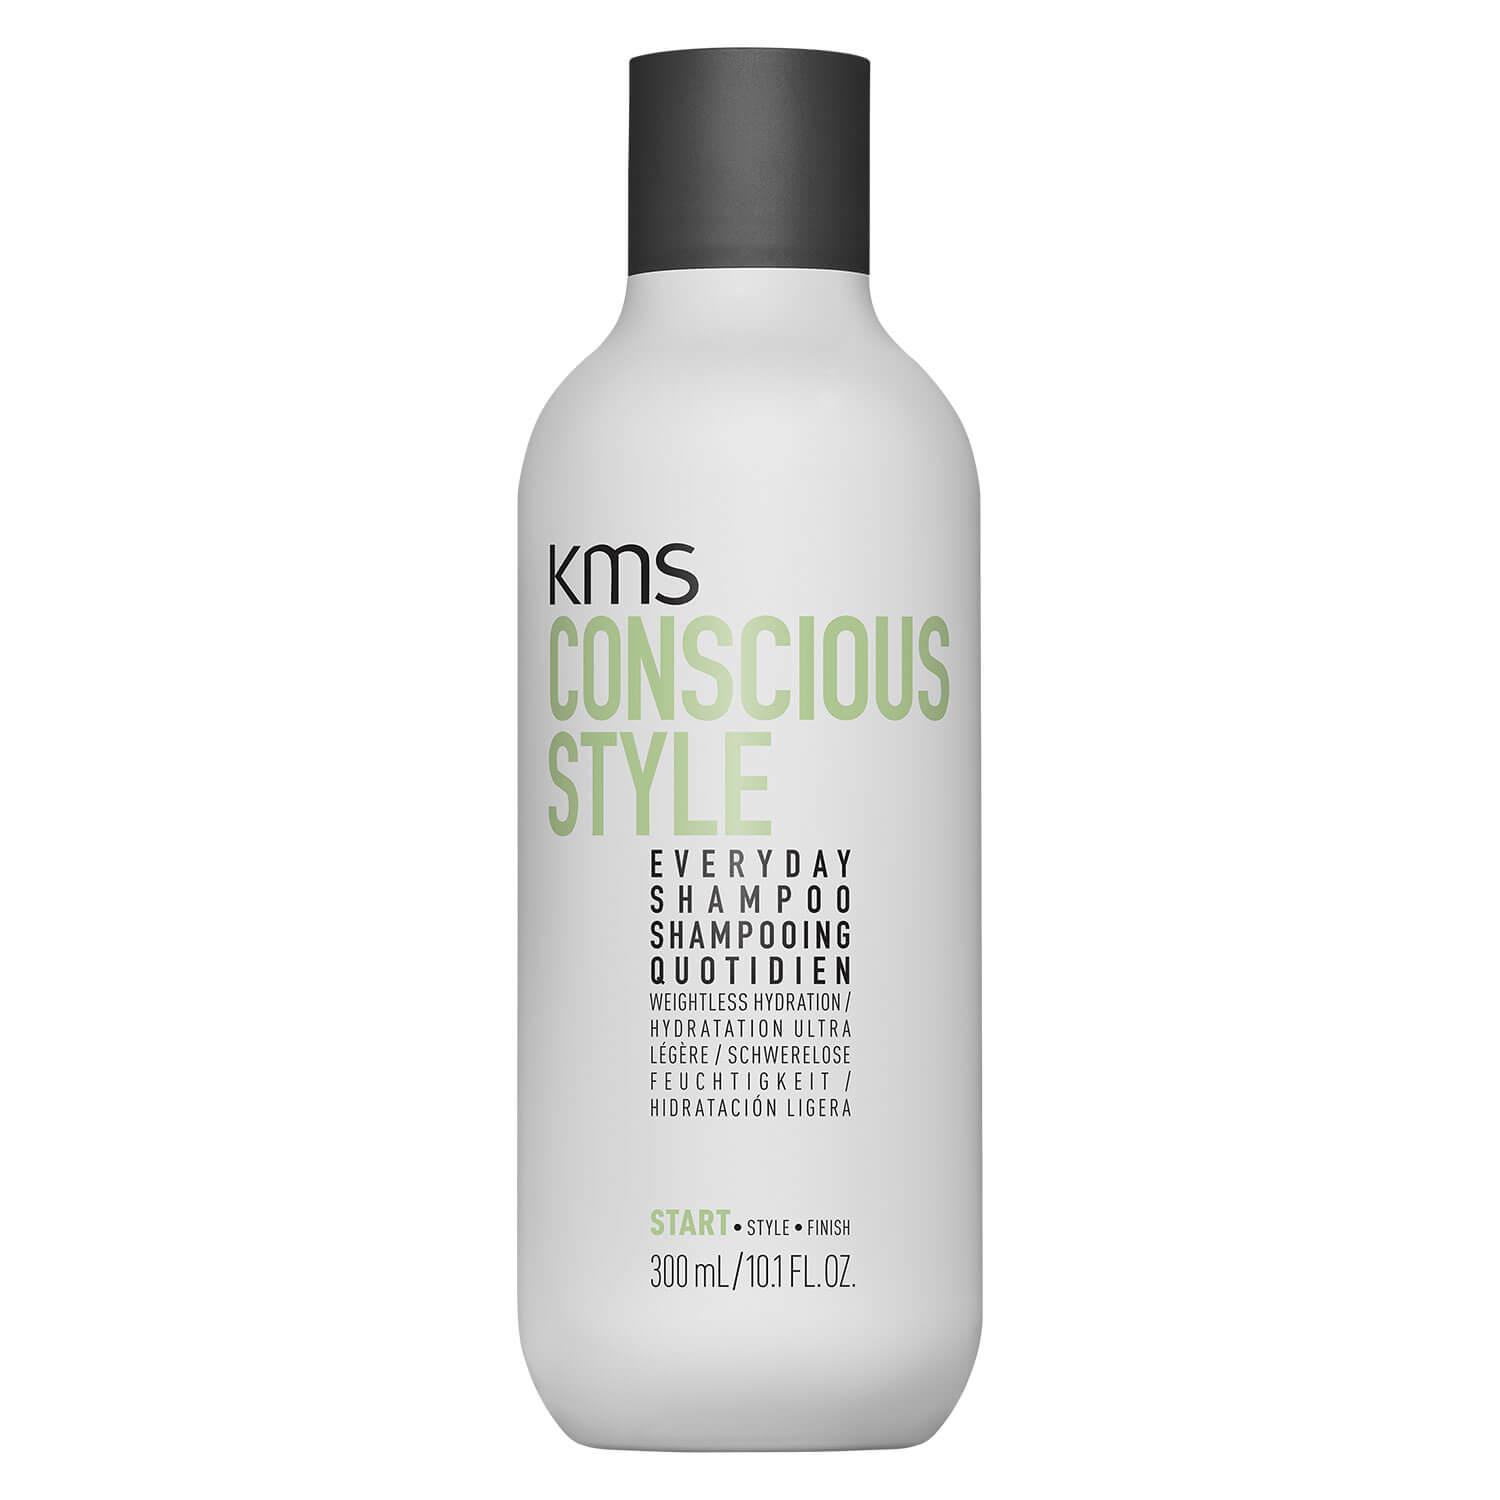 Consciousstyle - Everyday Shampoo